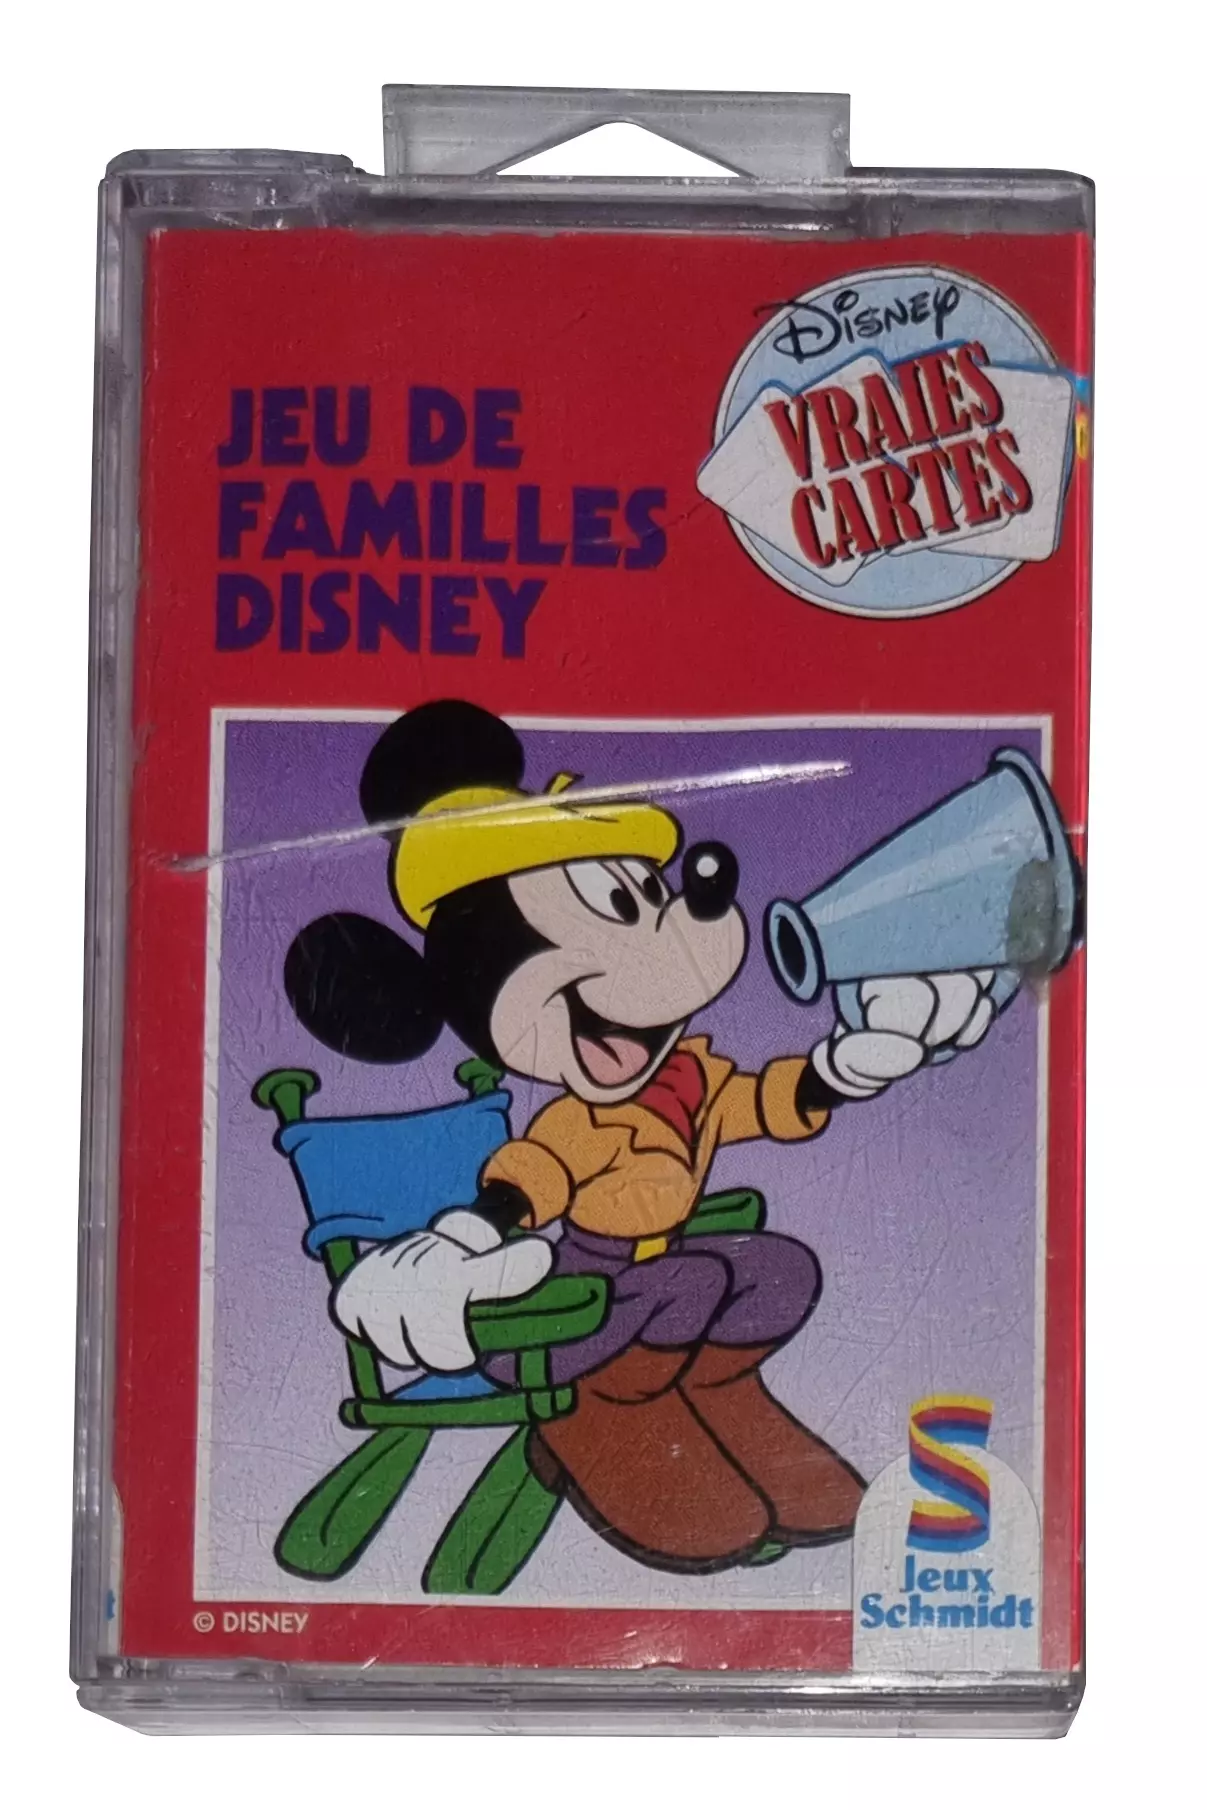 Schmidt Disney Vraies Cartes Jeu des familles Disney